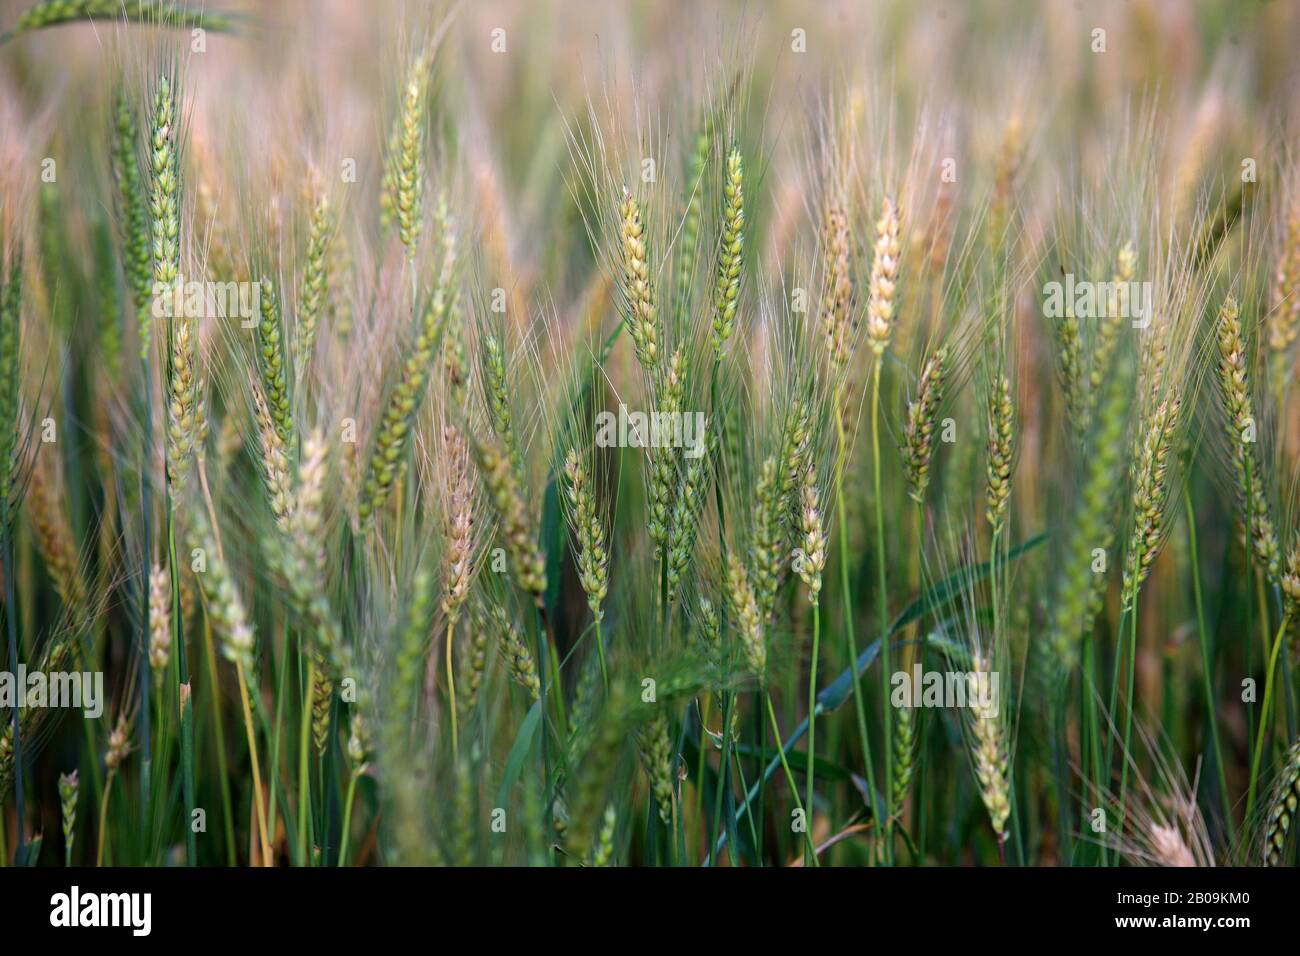 Ears of wheat. Bangladesh. February 2011. Stock Photo